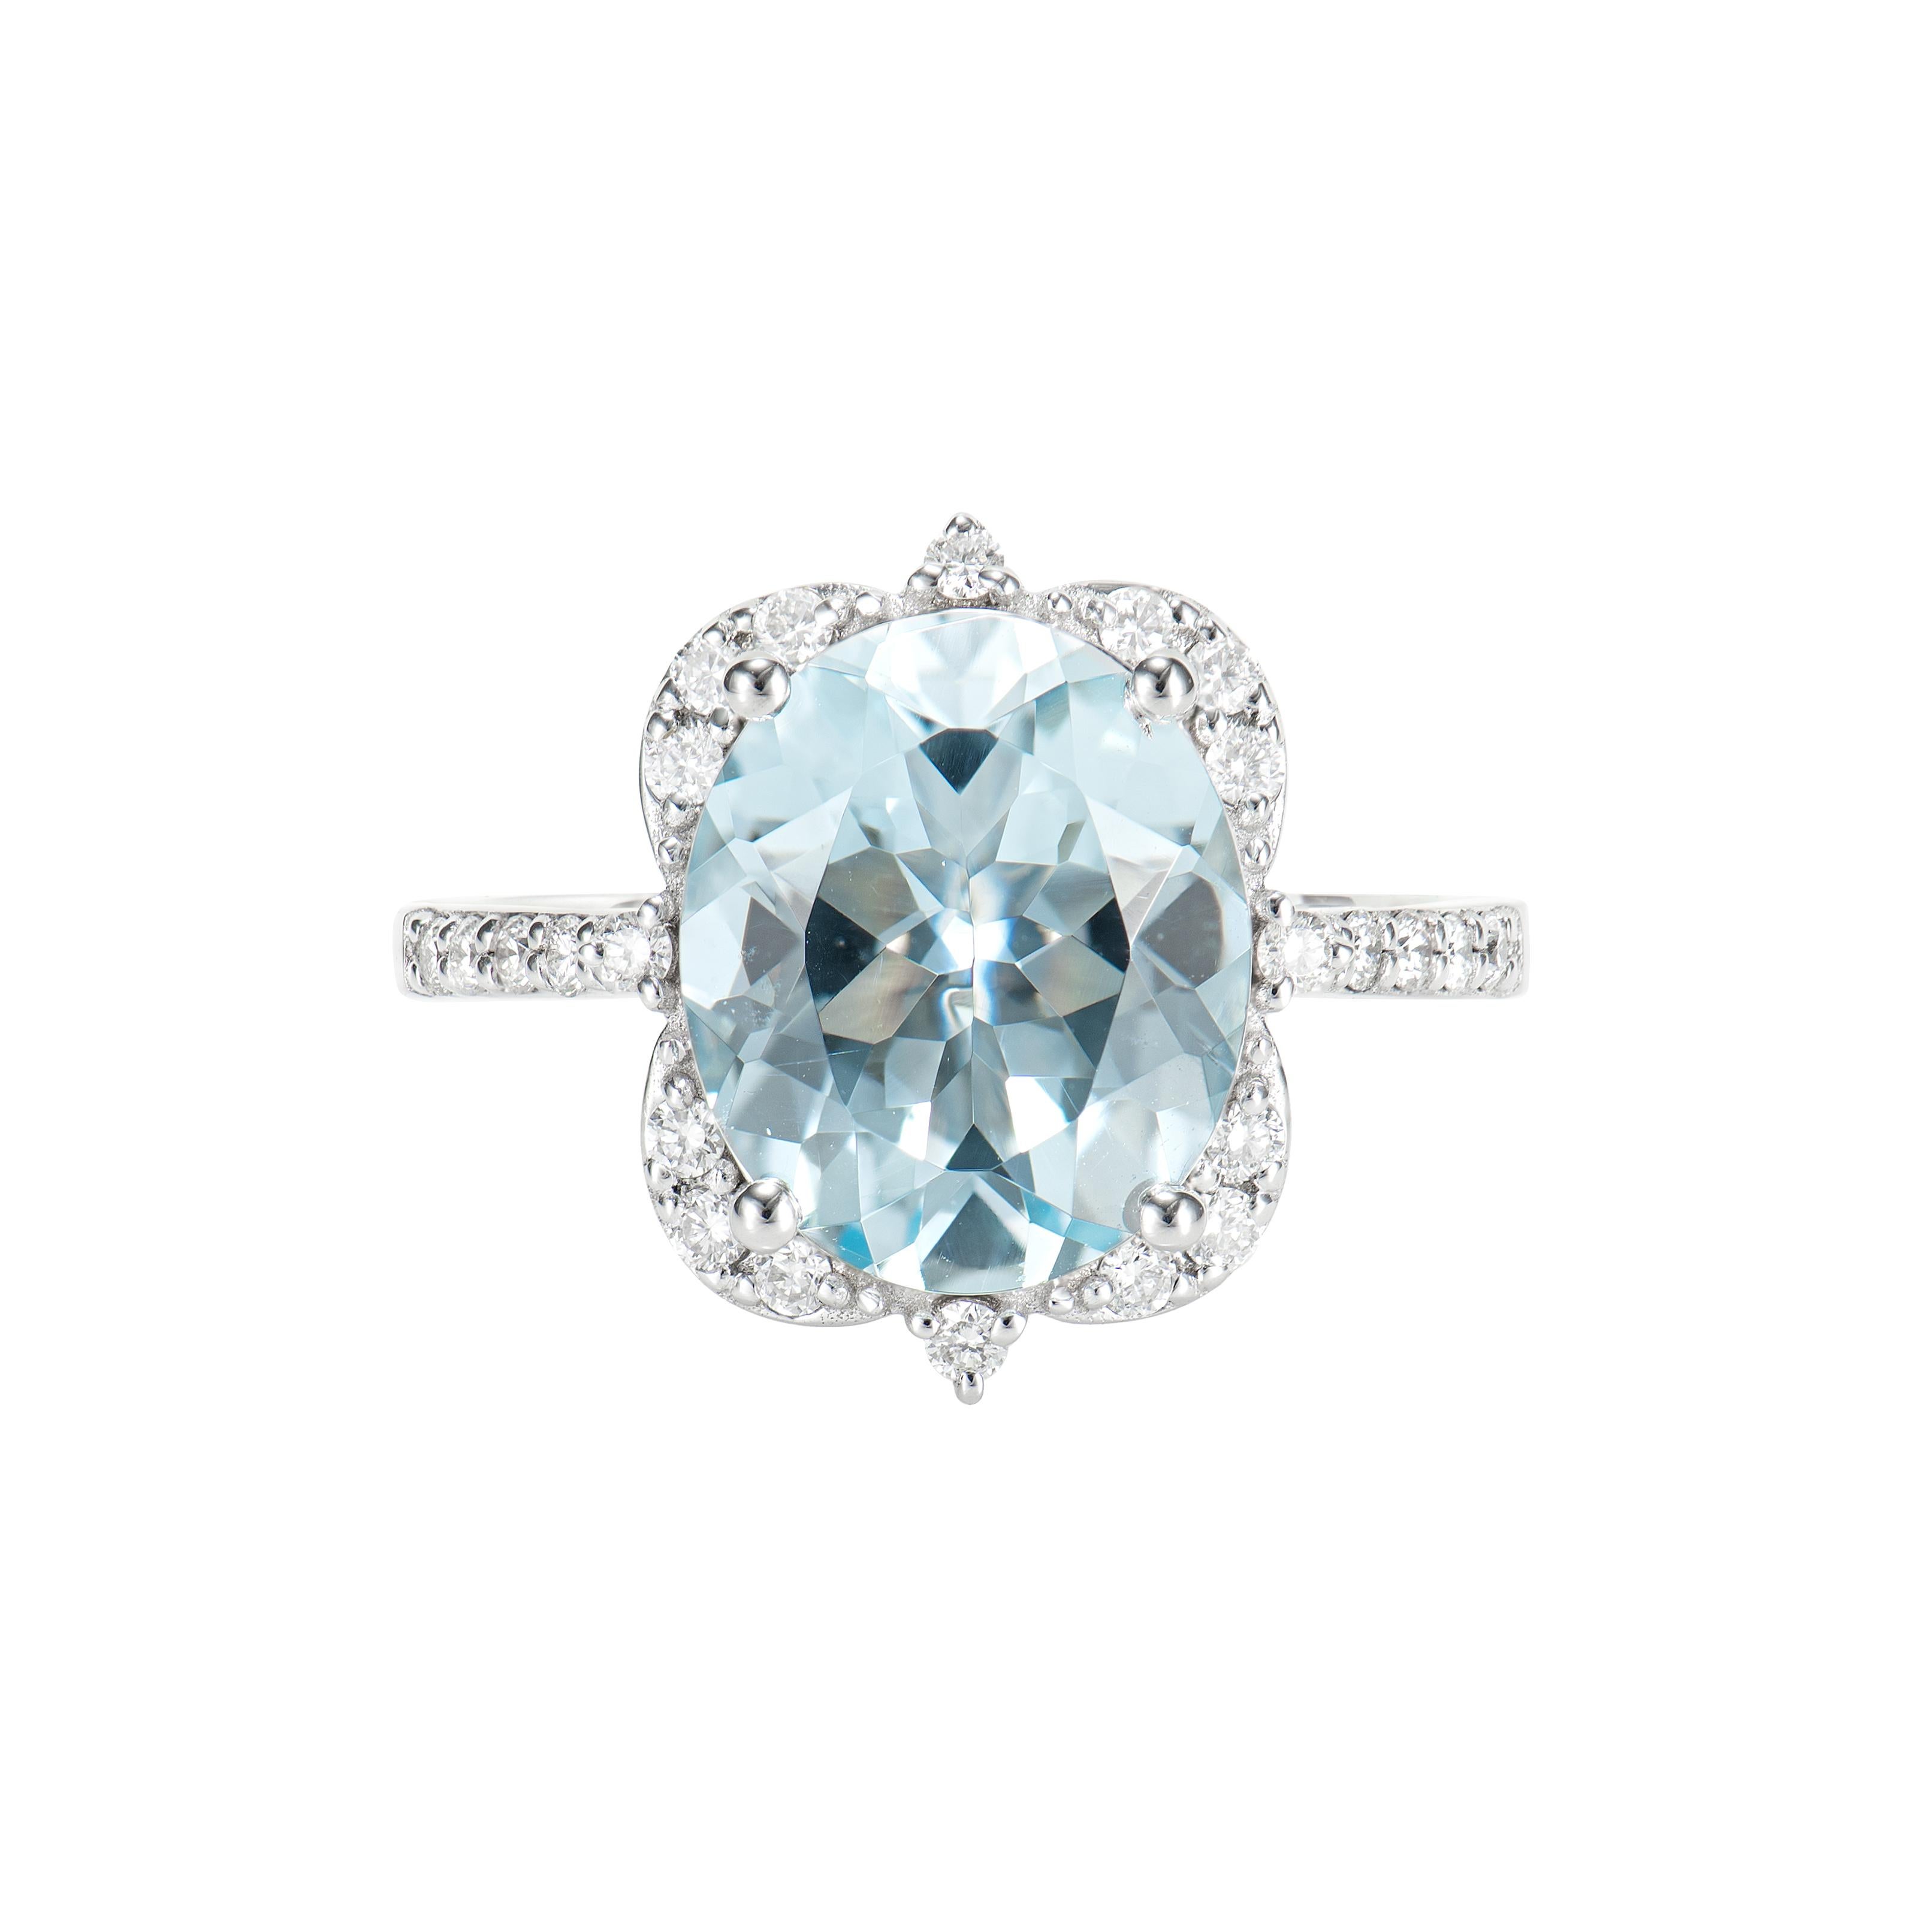 Contemporary 3.73 Carat Aquamarine Elegant Ring in 18 Karat White Gold with White Diamond. For Sale